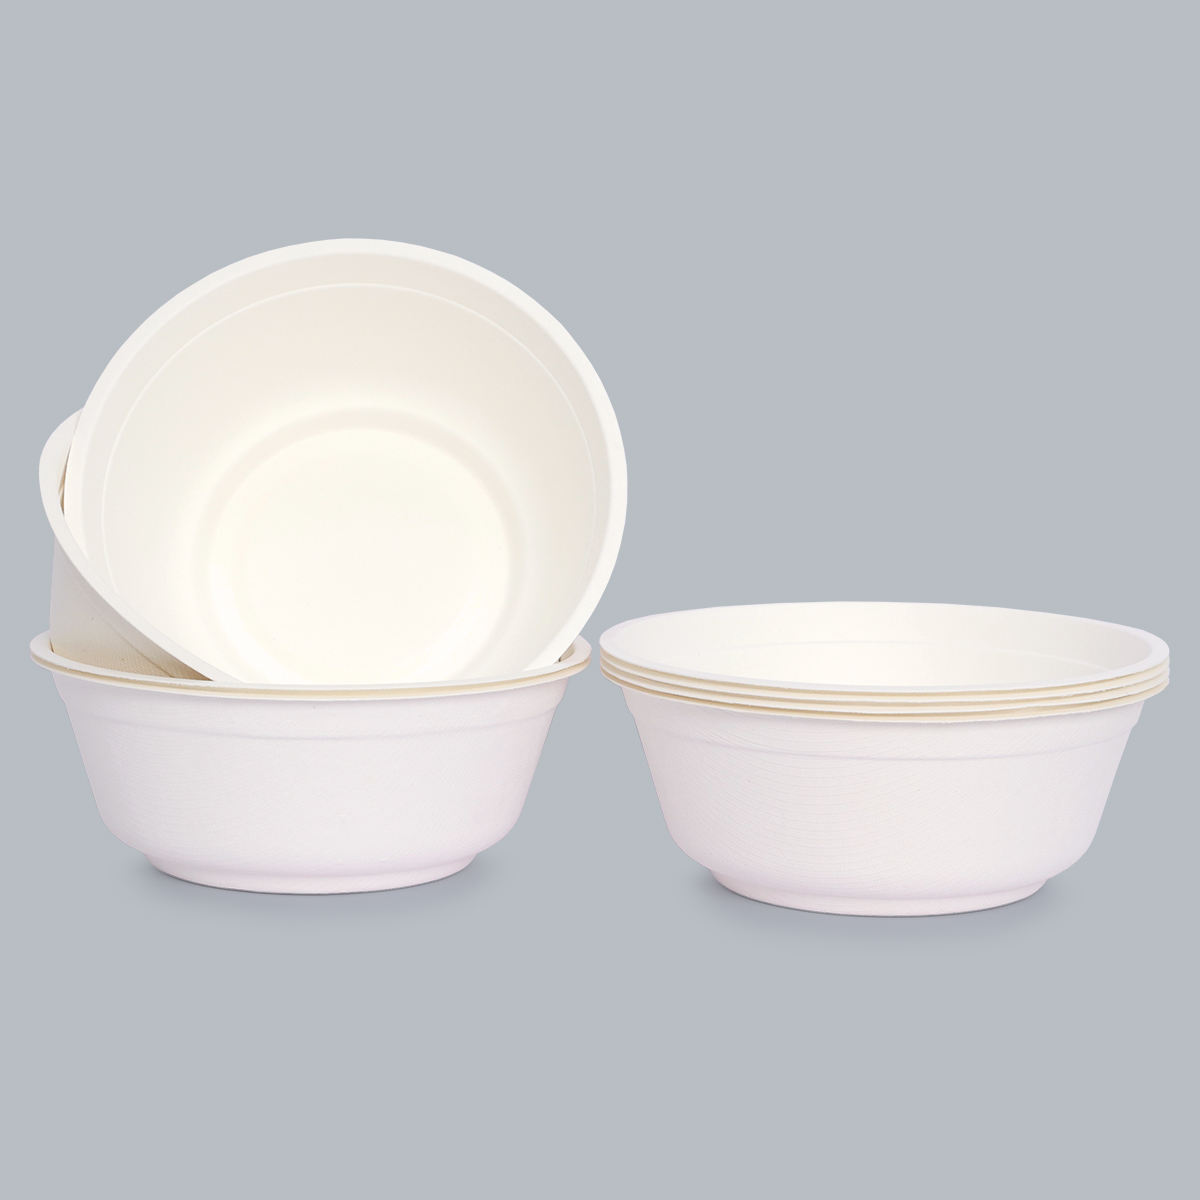 Picnic bowls Disposable environmentally friendly tableware Takeout bowls